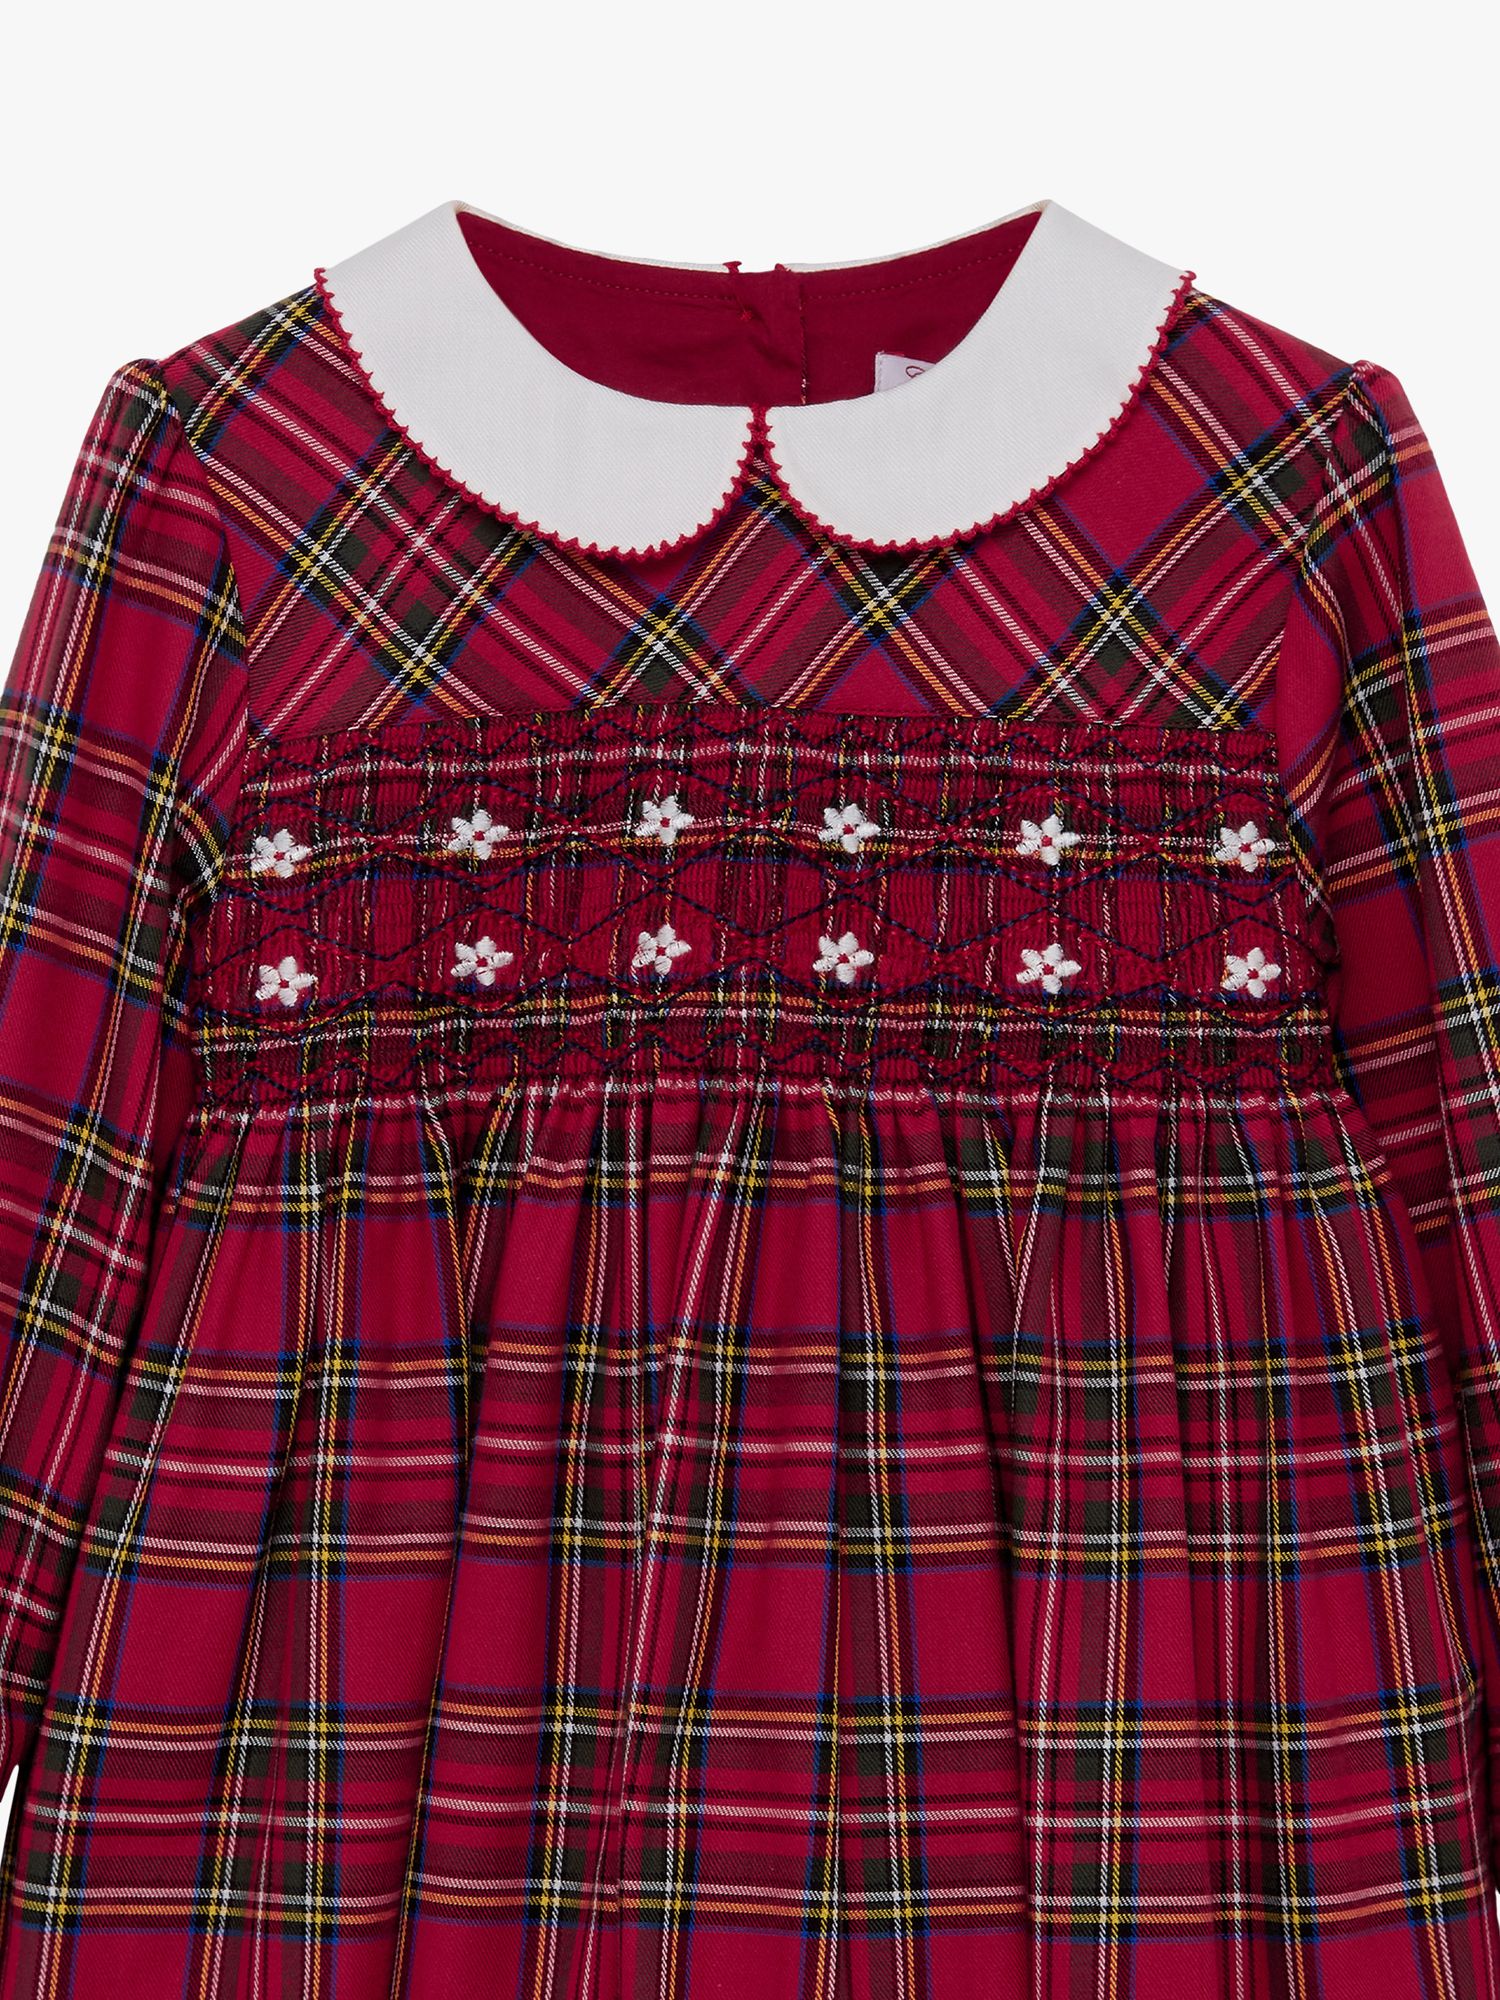 Buy Trotters Kids' Charlotte Tartan Smocked Dress, Red Online at johnlewis.com